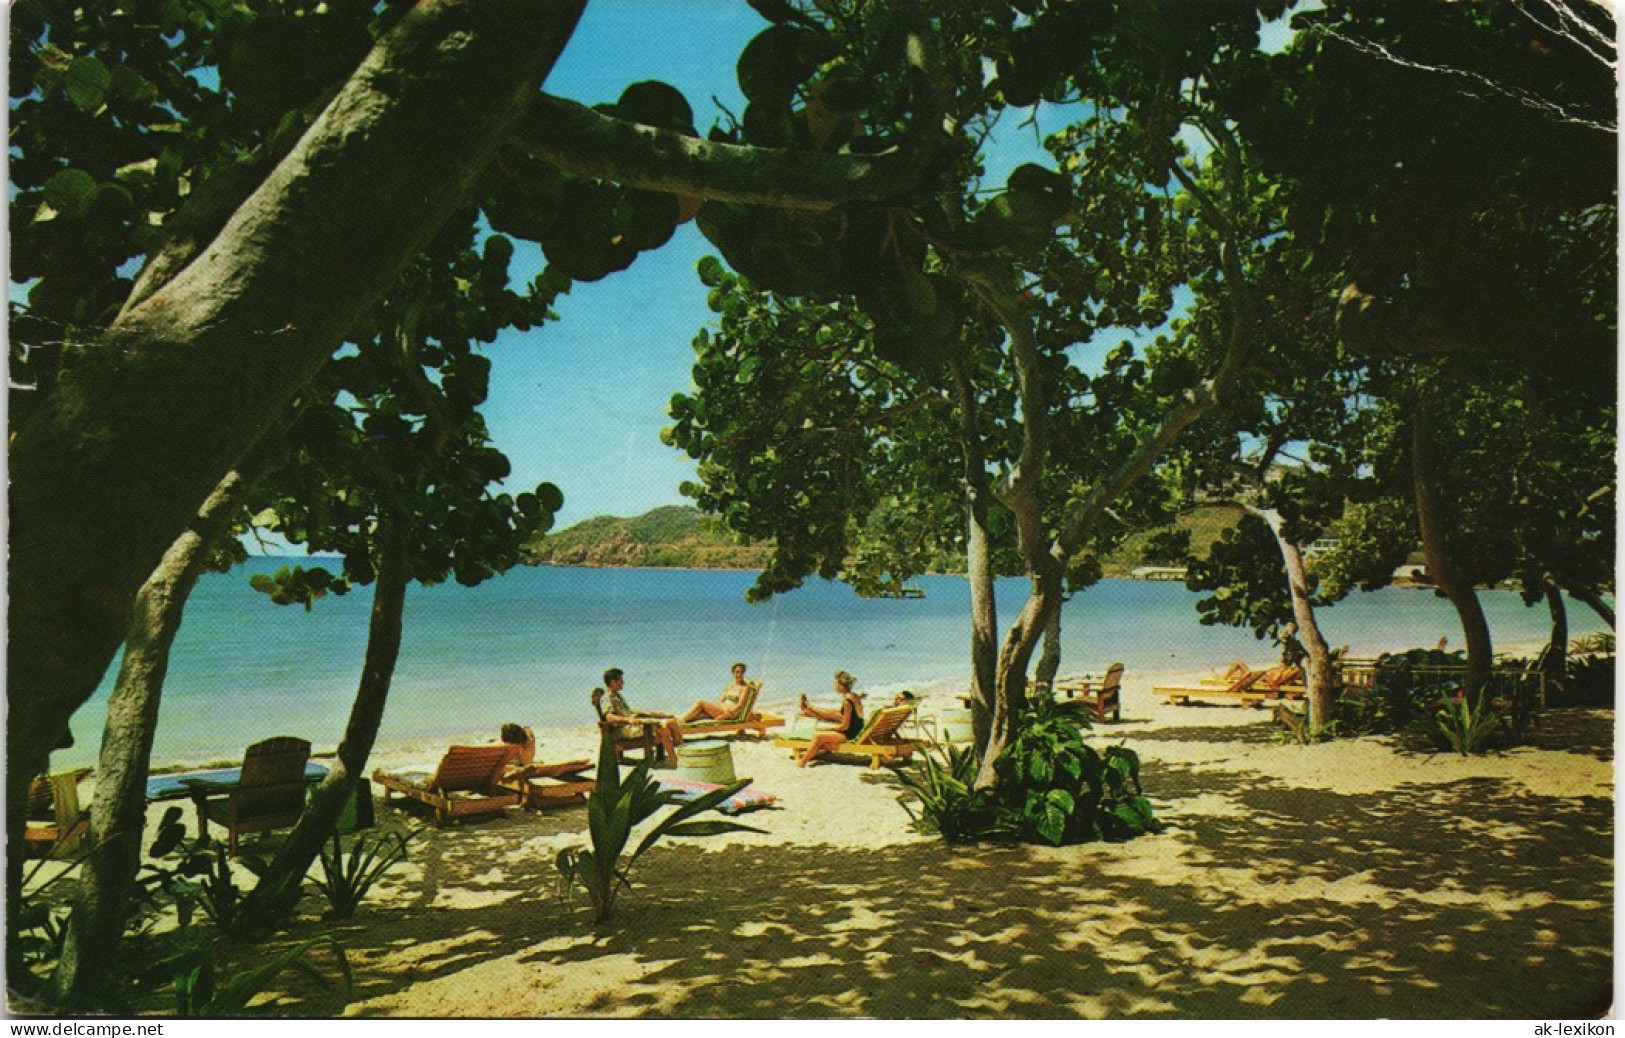 St. Thomas Sankt Thomas ISLAND BEACHCOMBER HOTEL Karibik Caribean Sea 1964 - Vierges (Iles), Amér.